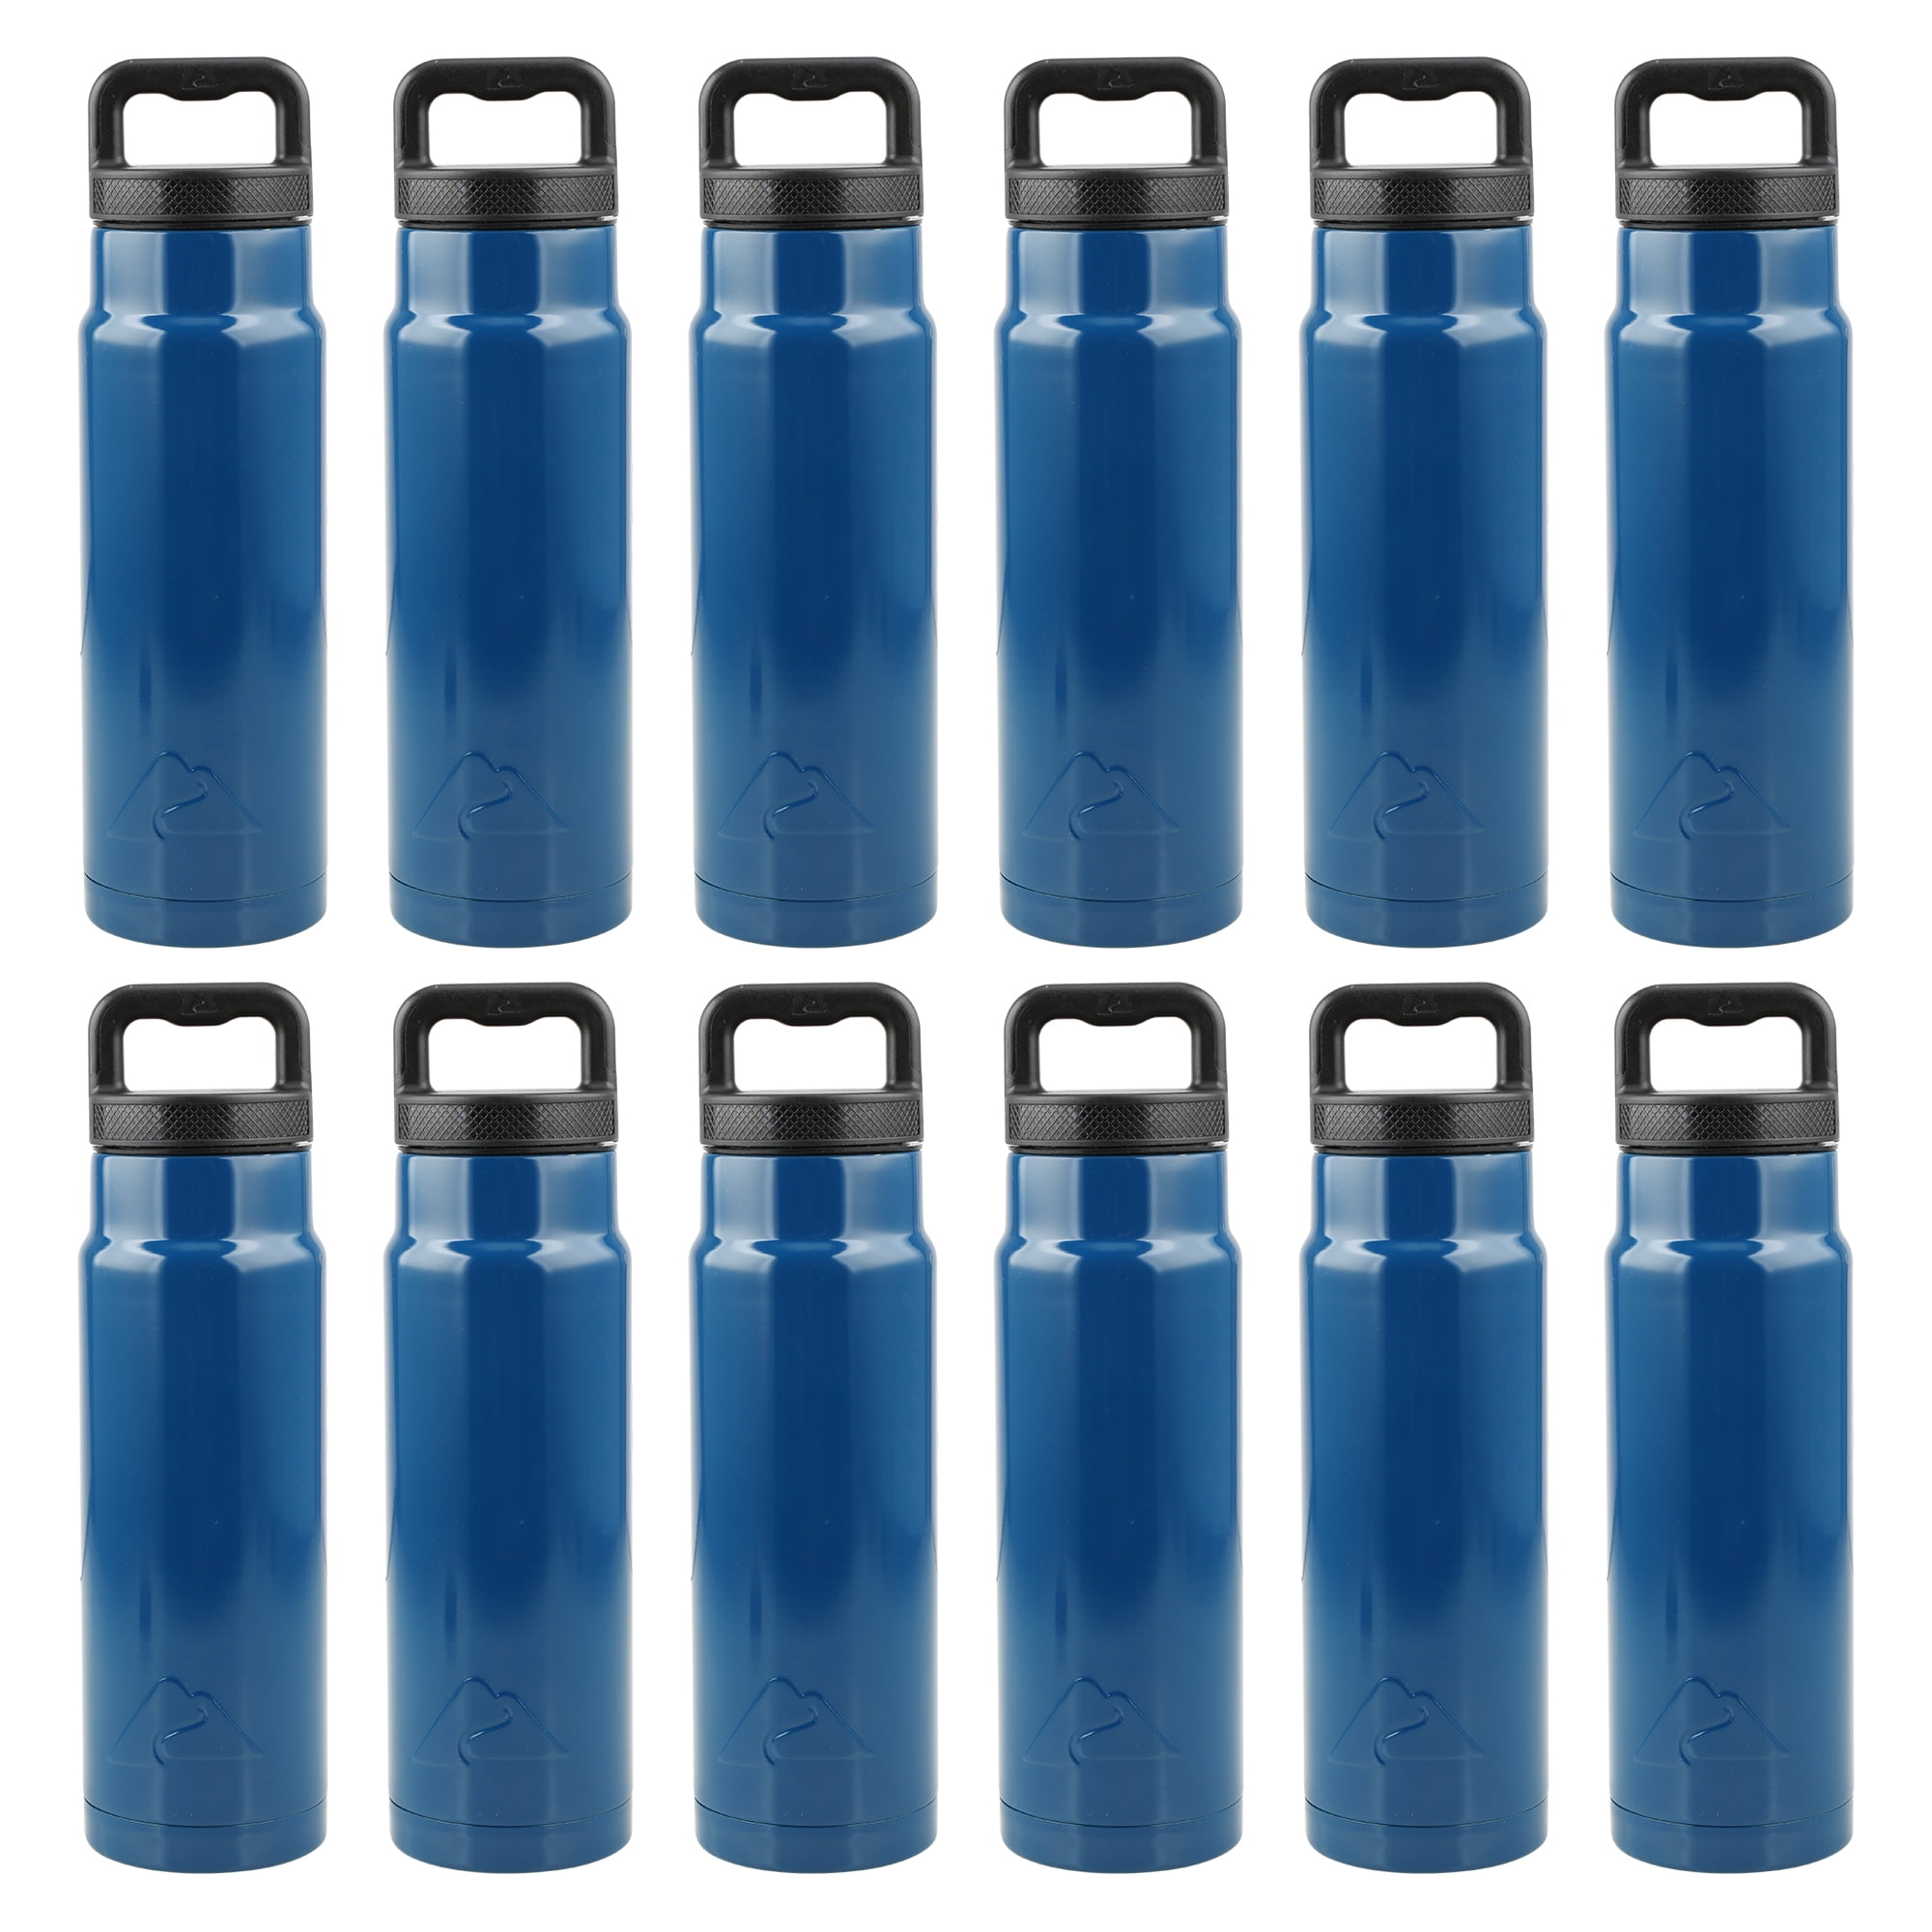 Athletic Works Jet Squeeze Bottle - Blue - 24 fl oz